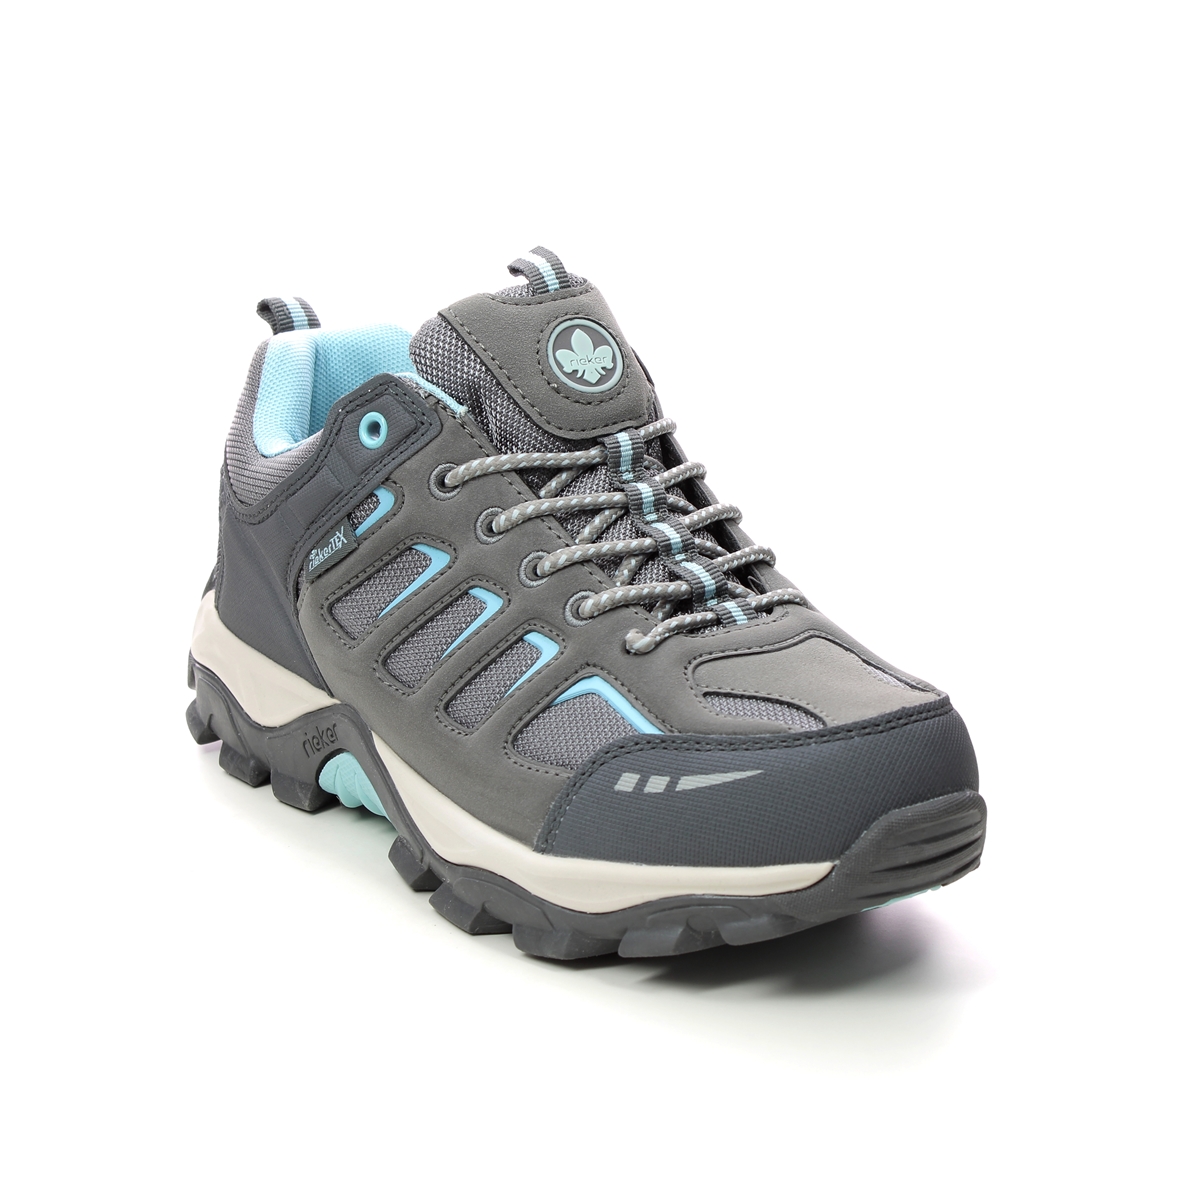 Rieker N8820-42 Grey Aqua Womens Walking Shoes in a Plain Man-made in Size 36